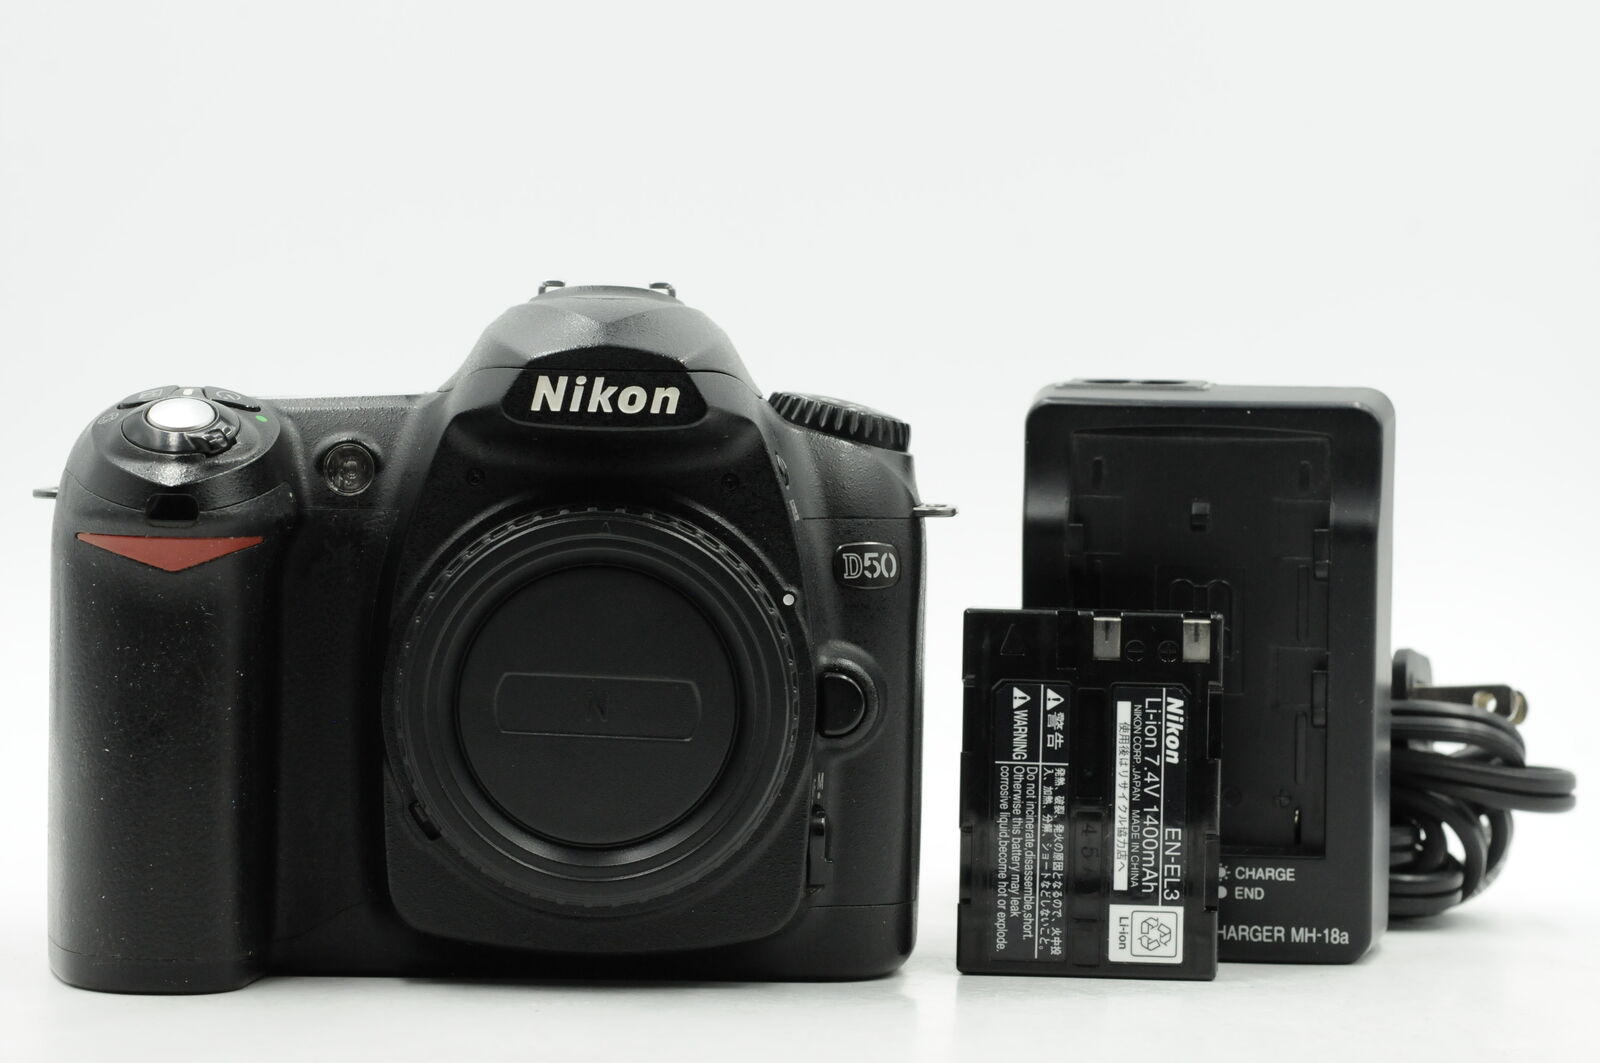 Nikon D50 6.1MP Digital SLR Camera Body #403